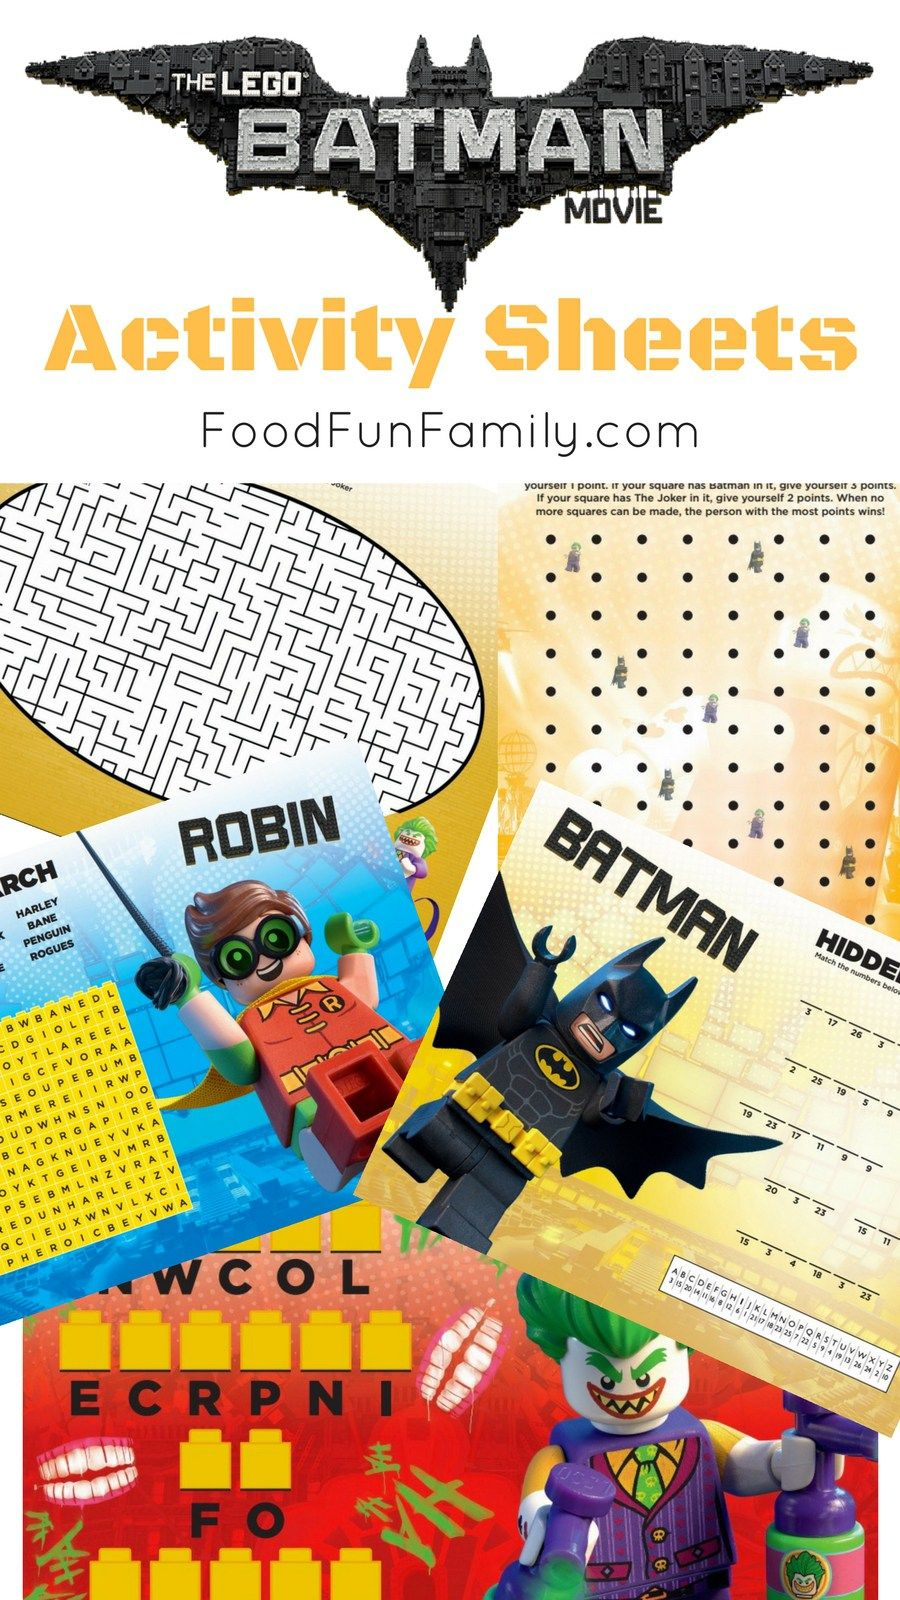 Lego Batman Movie Free Printable Activity Sheets | Lego Dc | Pinterest - Free Printable Lego Batman